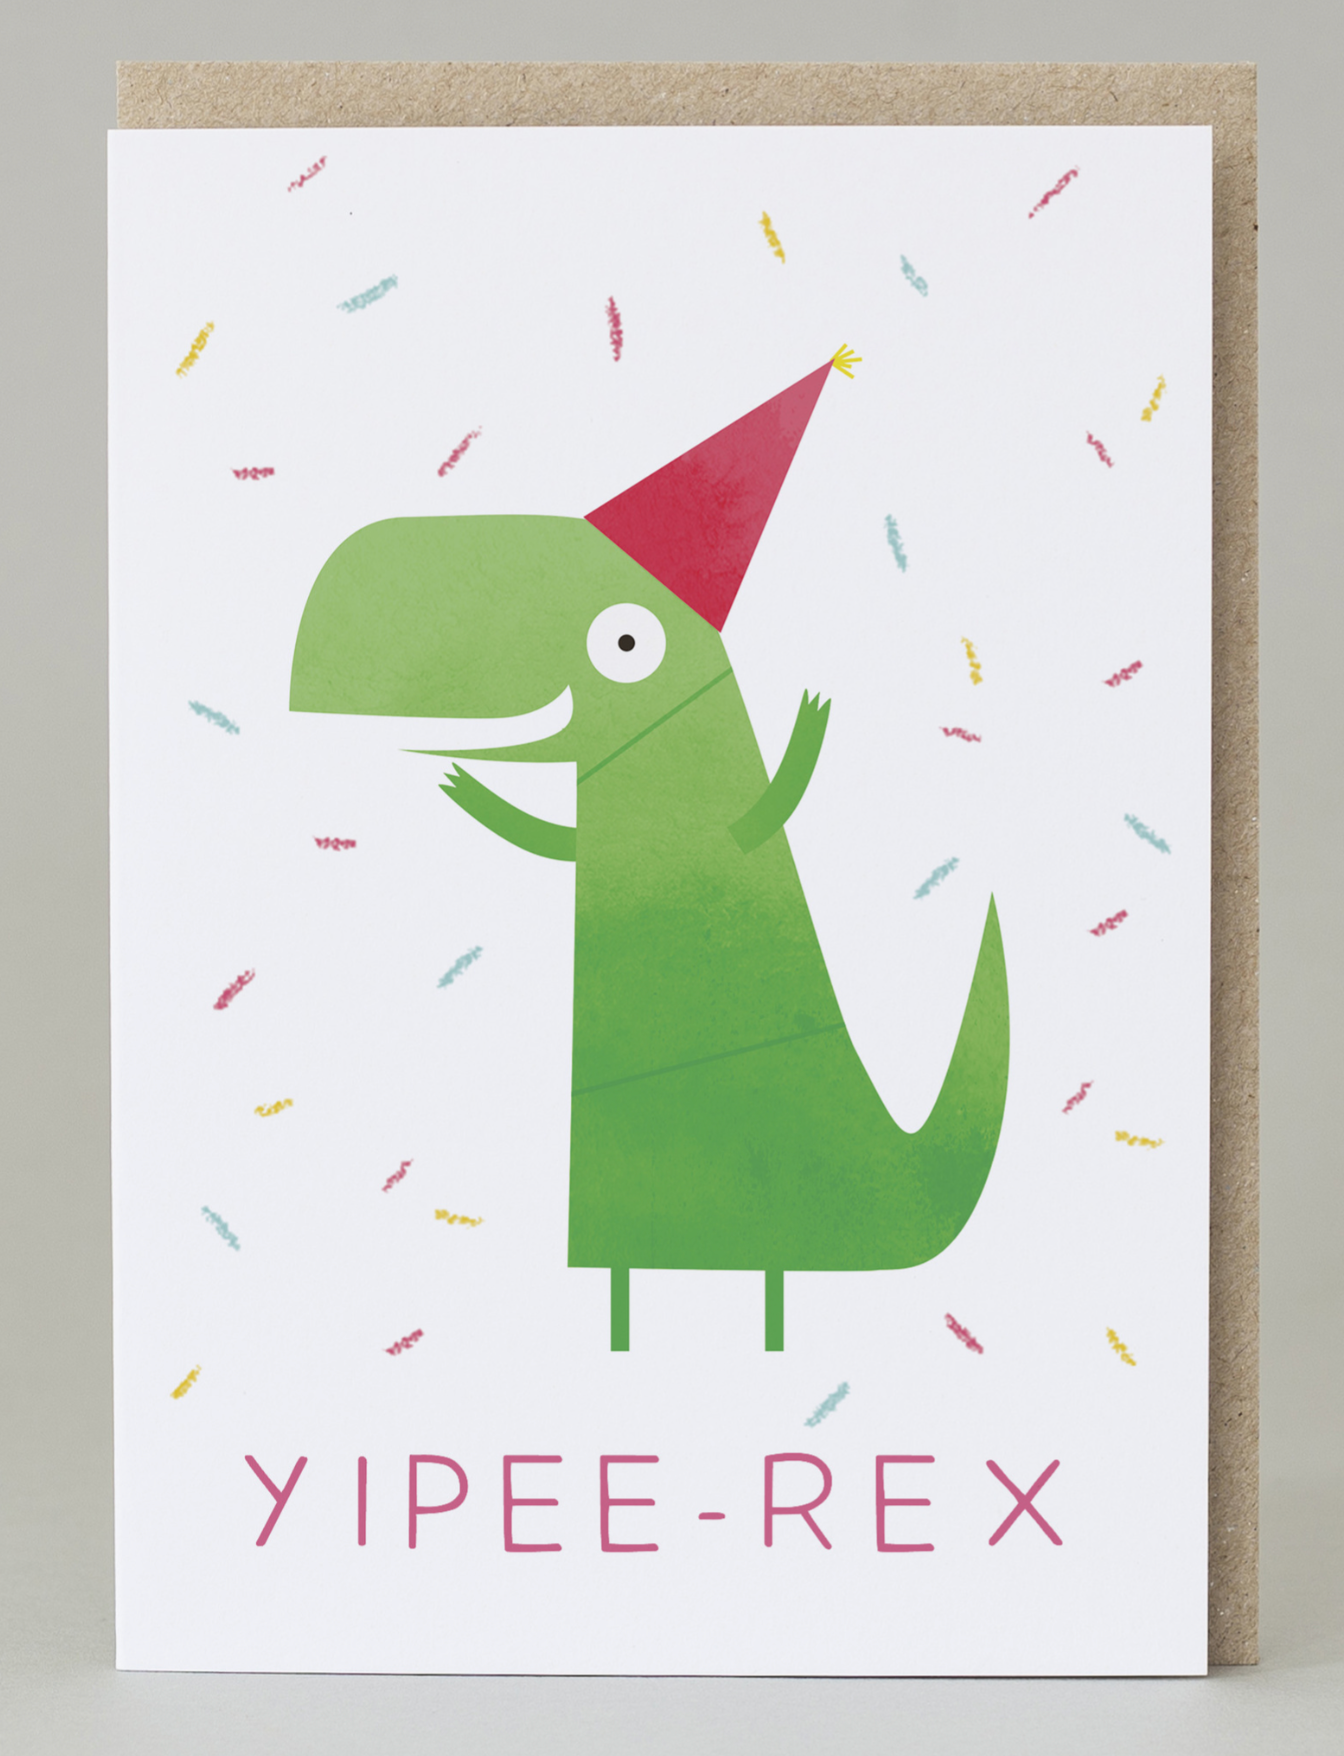 Yipee-Rex